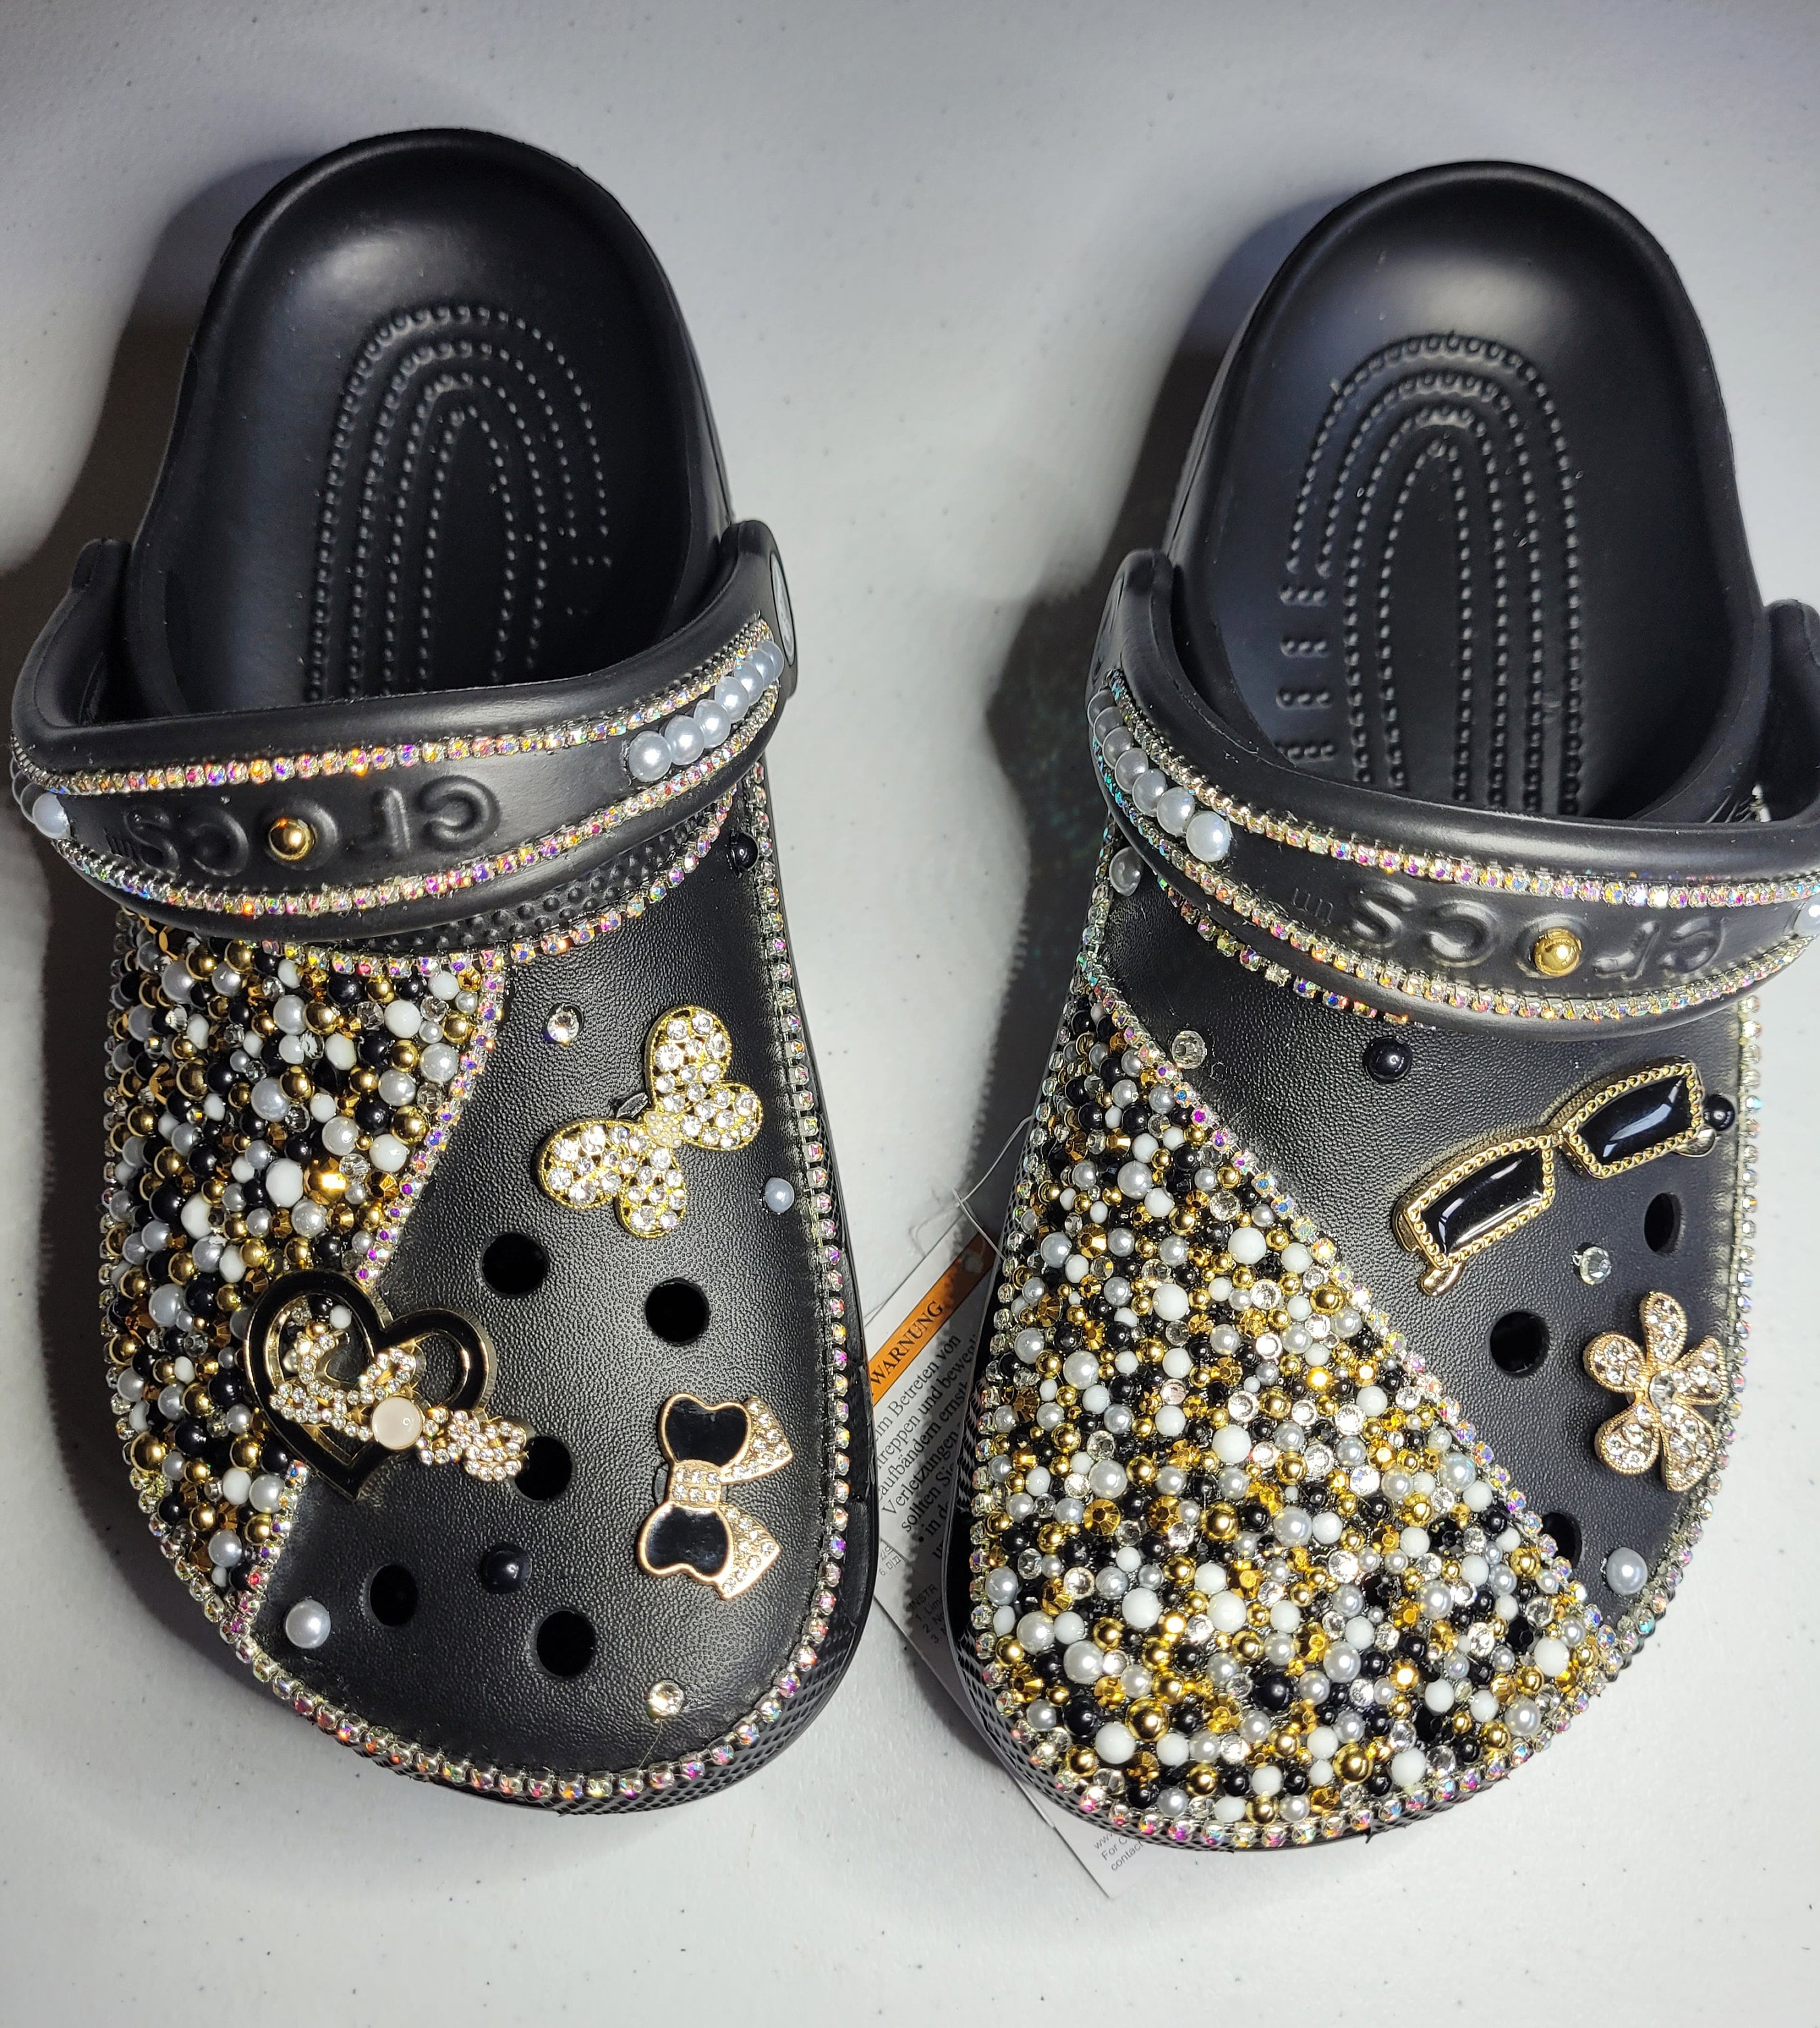 Gucci inspired custom crocs @khims_custom_krafts1615 